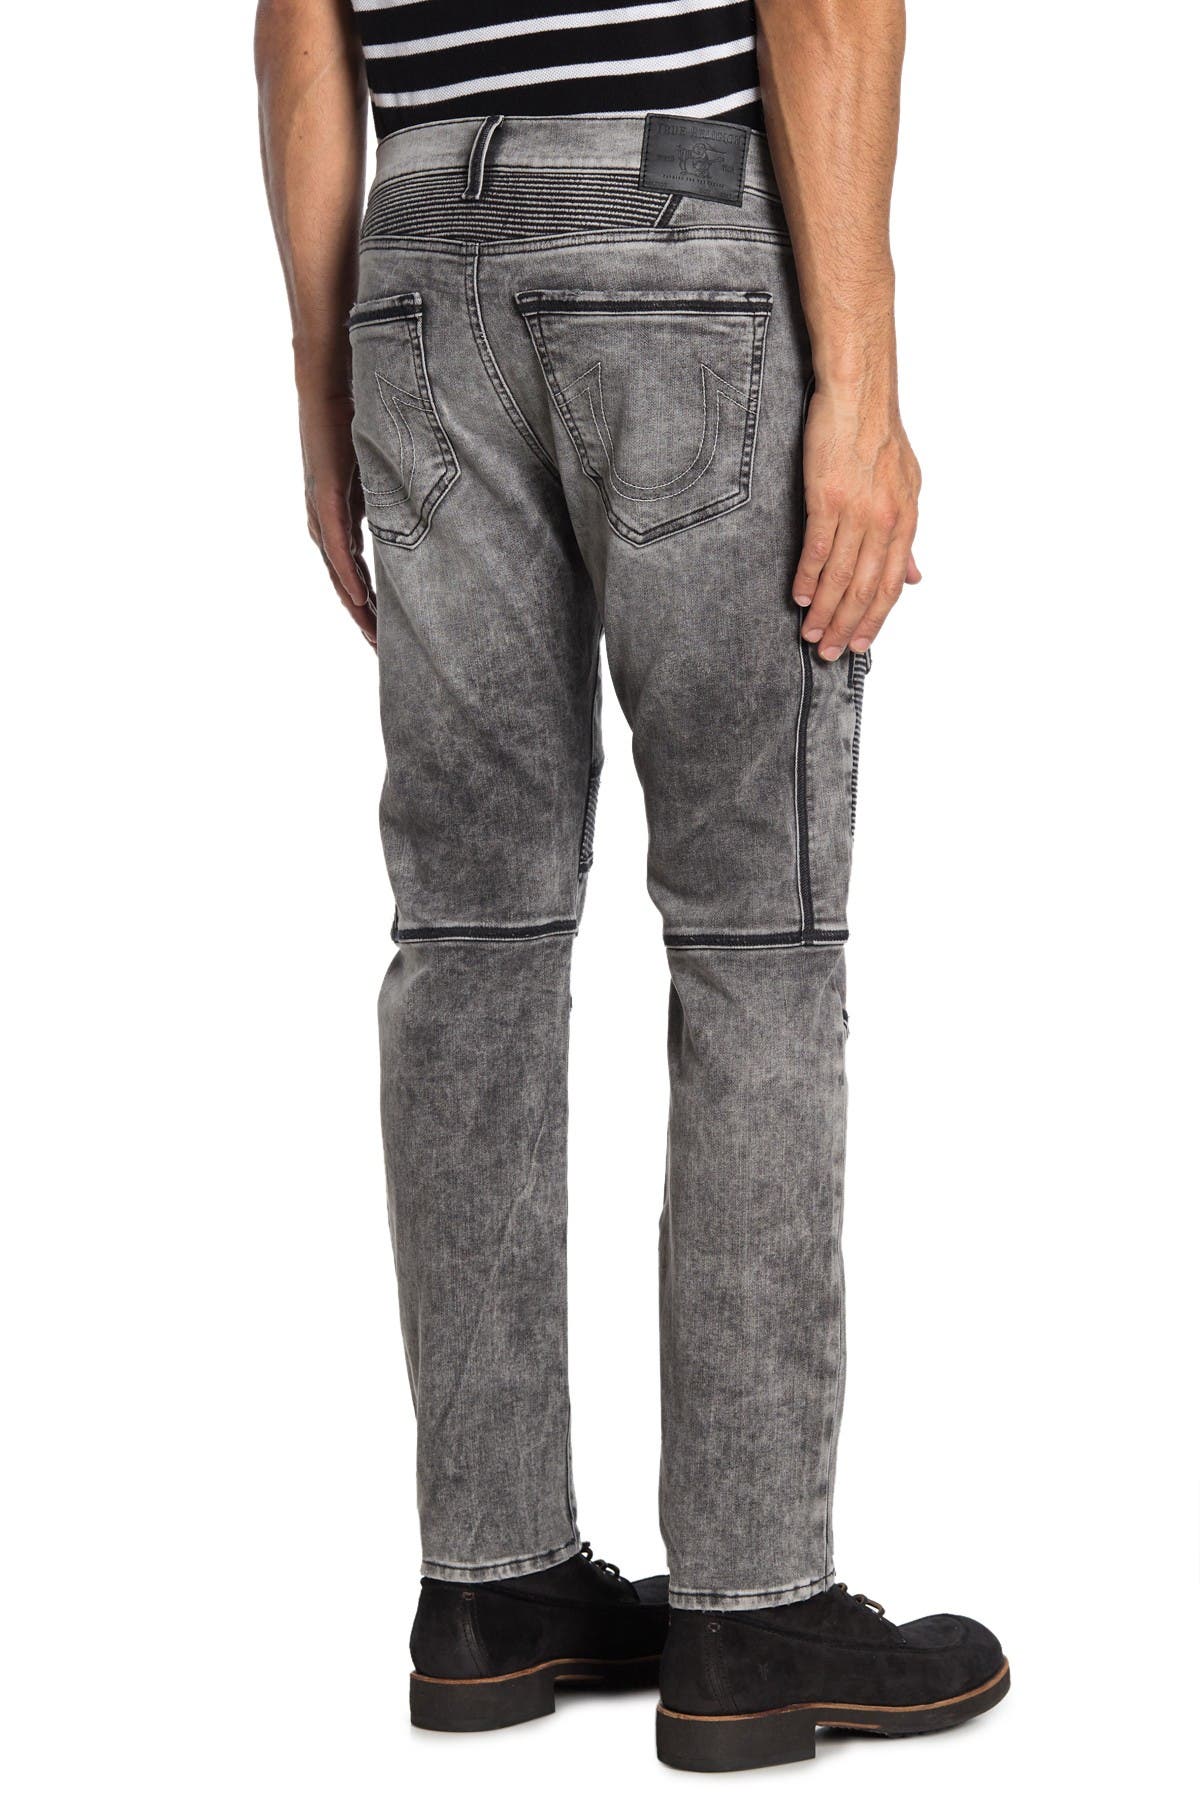 true religion rocco jeans grey